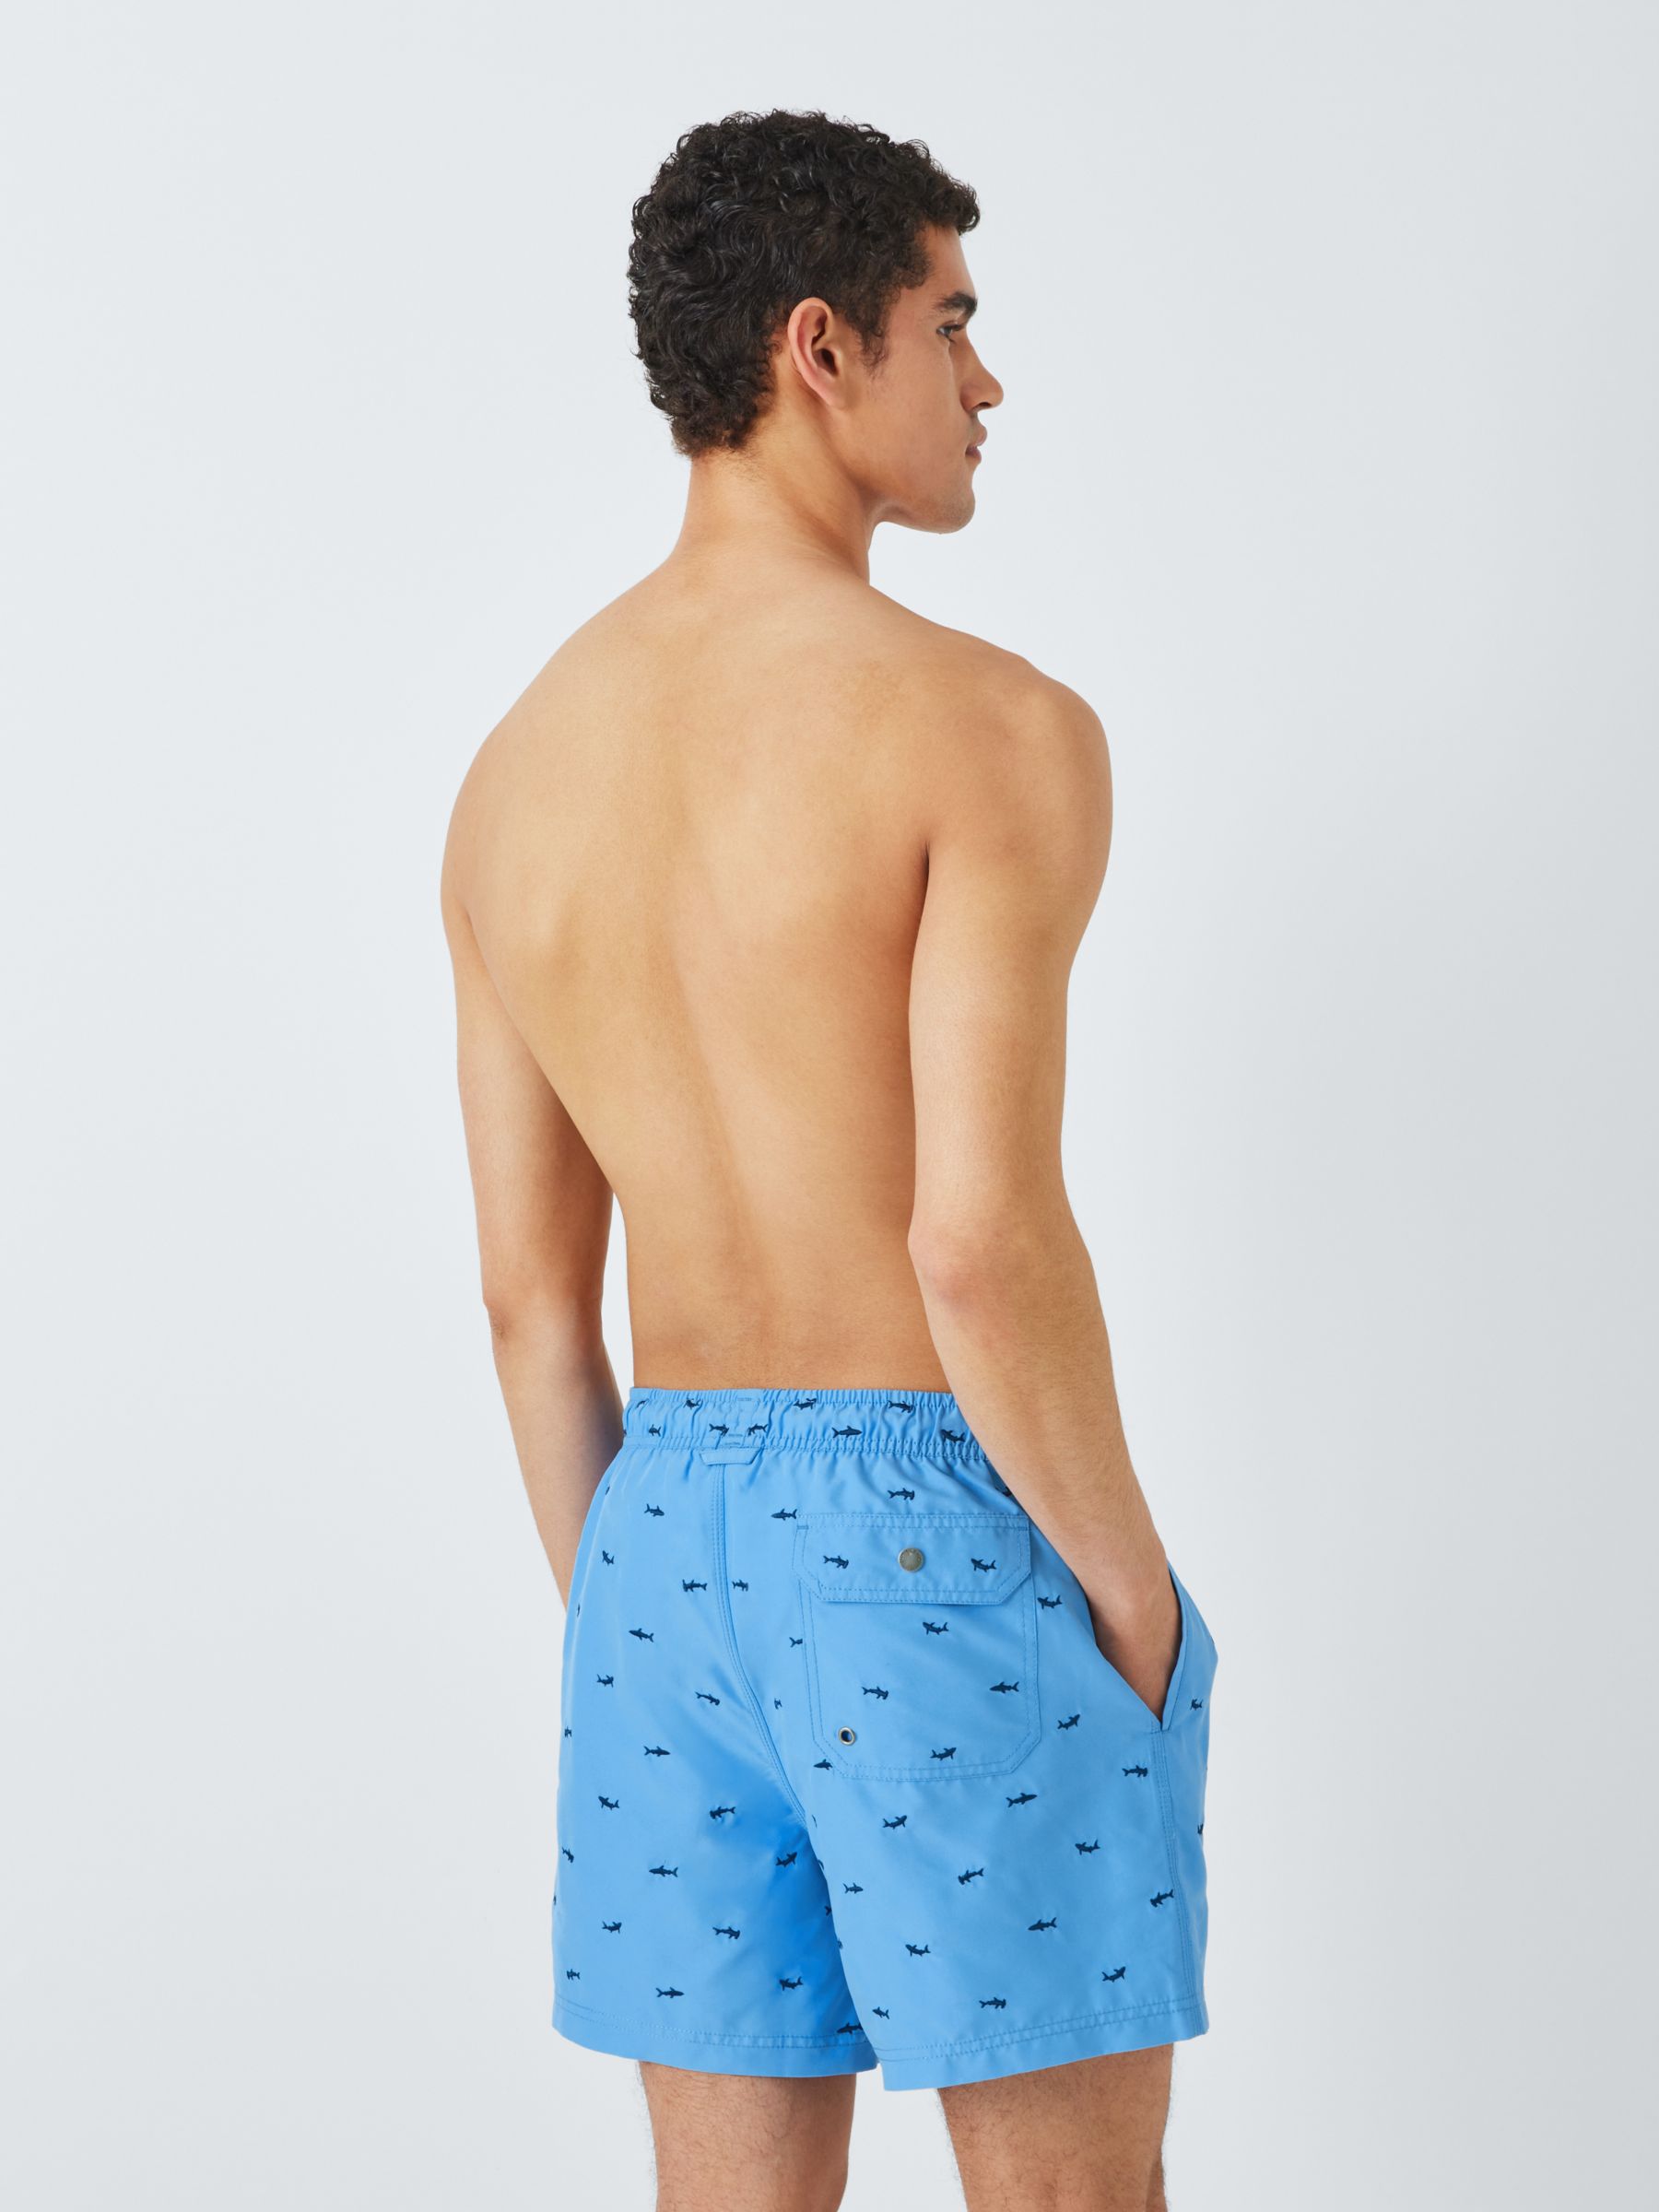 John Lewis Embroidered Shark Swim Shorts, Blue, L